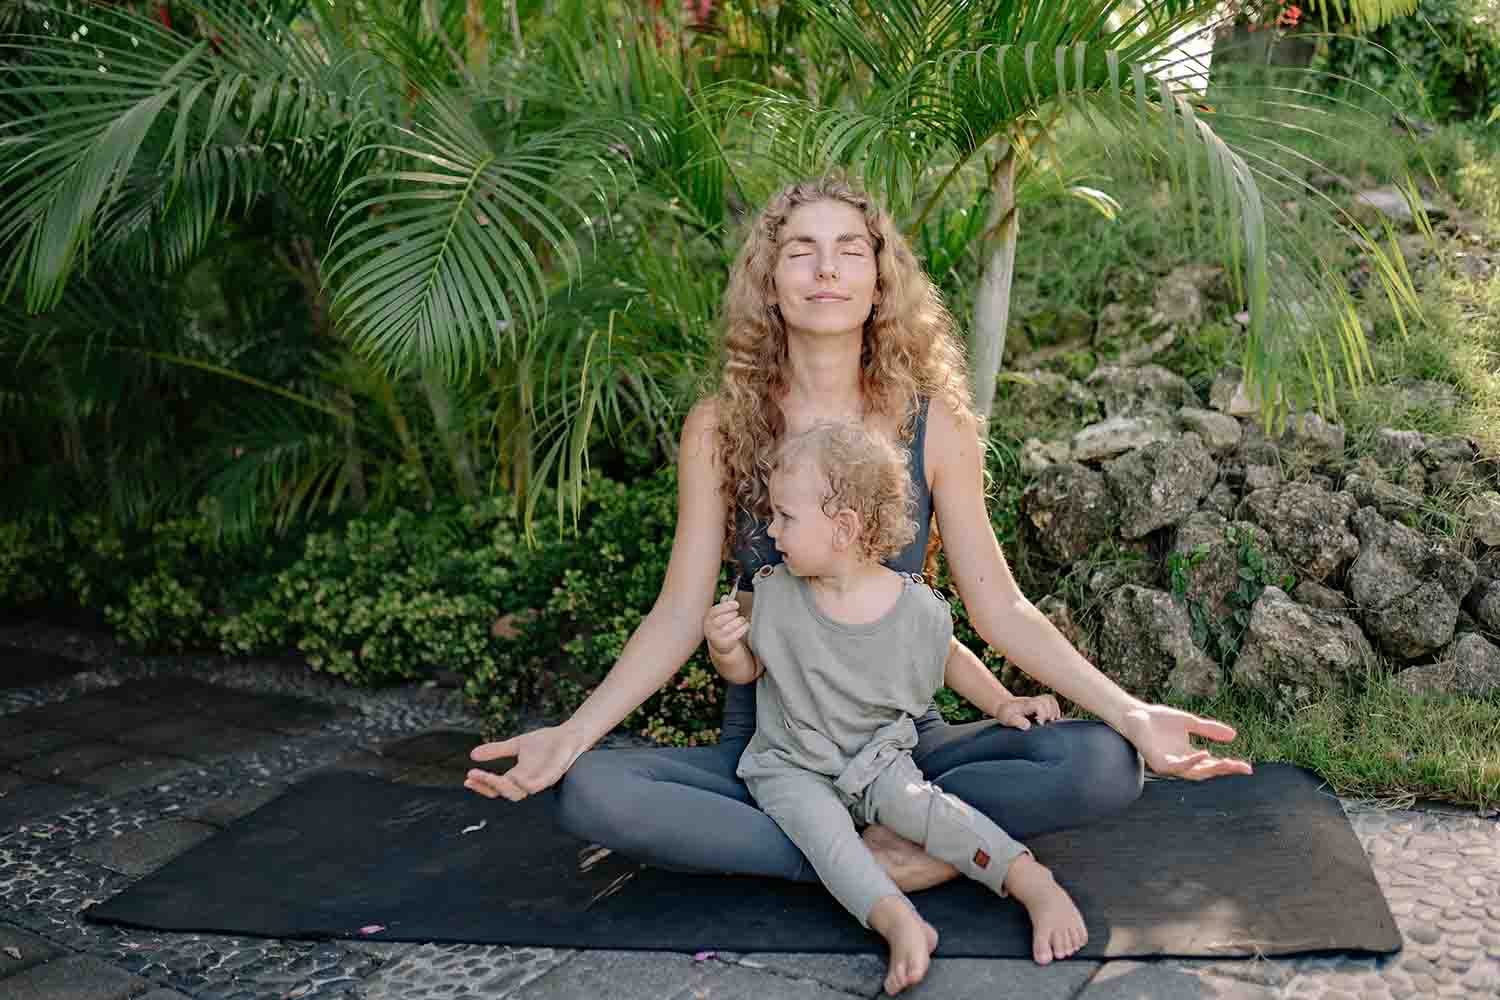 Mother yoga